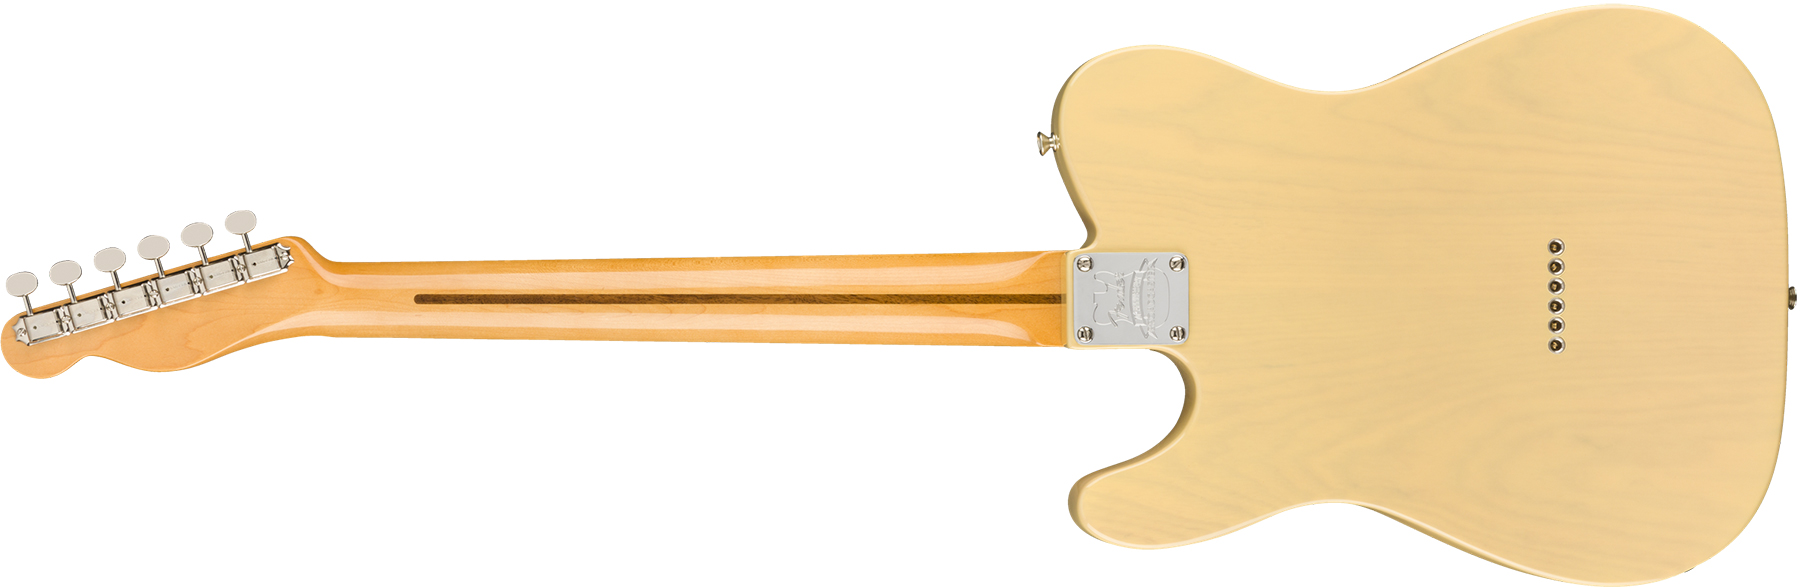 Fender Tele Broadcaster 70th Anniversary Usa Mn - Blackguard Blonde - E-Gitarre in Teleform - Variation 1